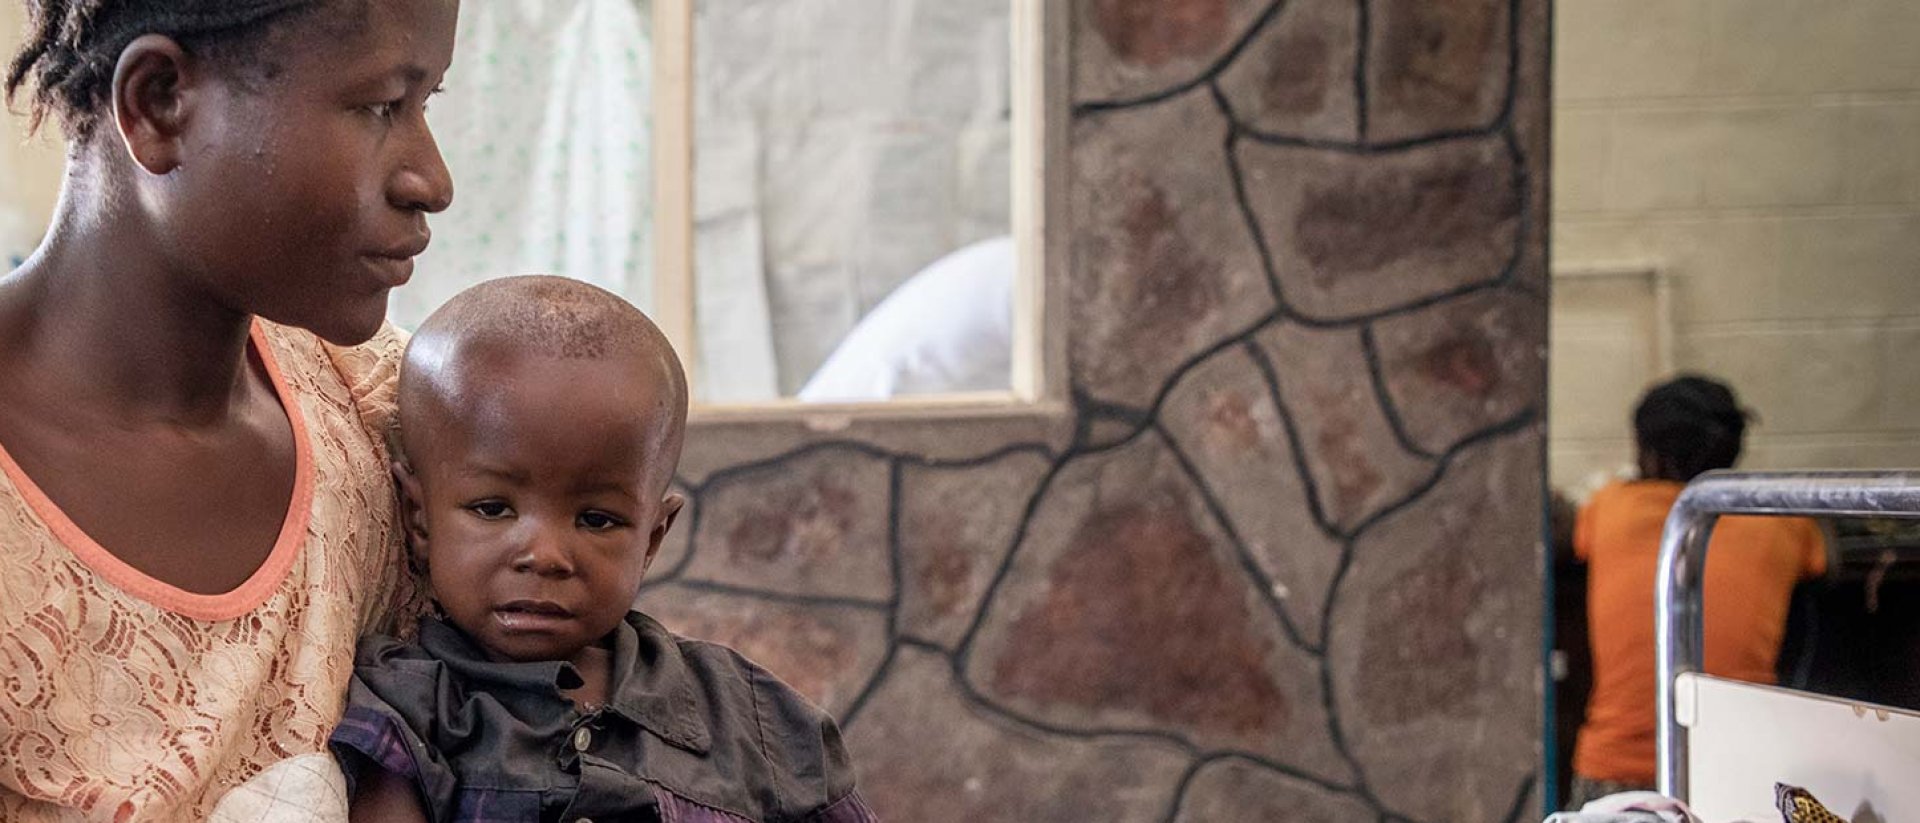 Neumonía - Un niño en un hospital de Save the Children en África